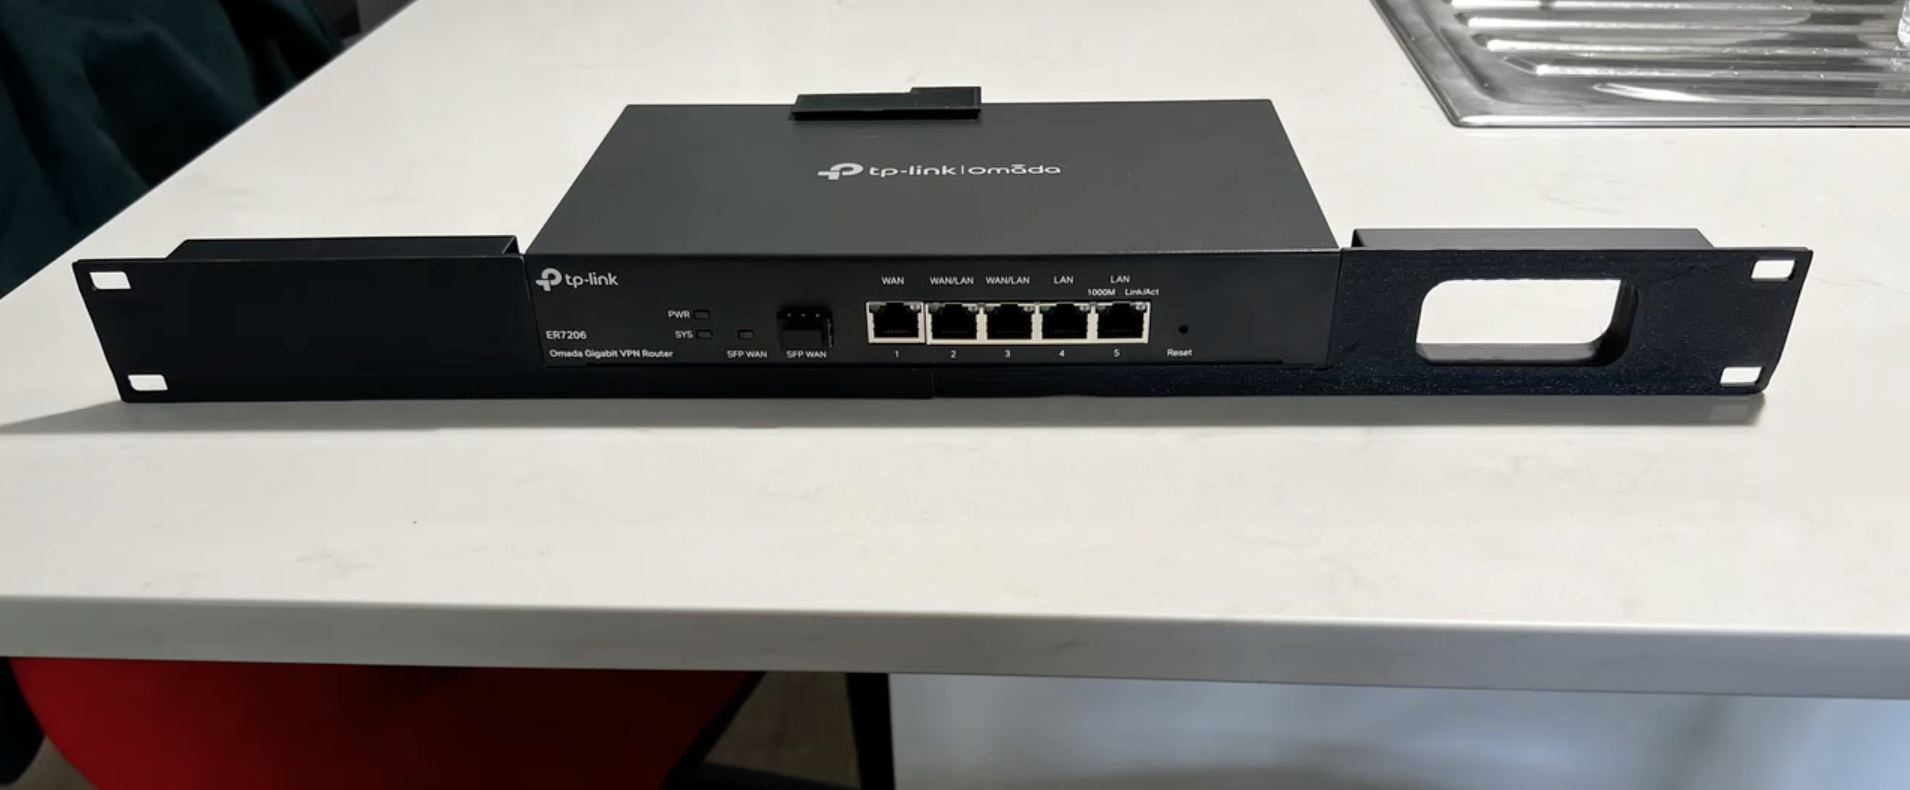 TP-Link 1U rackmount housing for ER7206 router mk II by ppastur ...